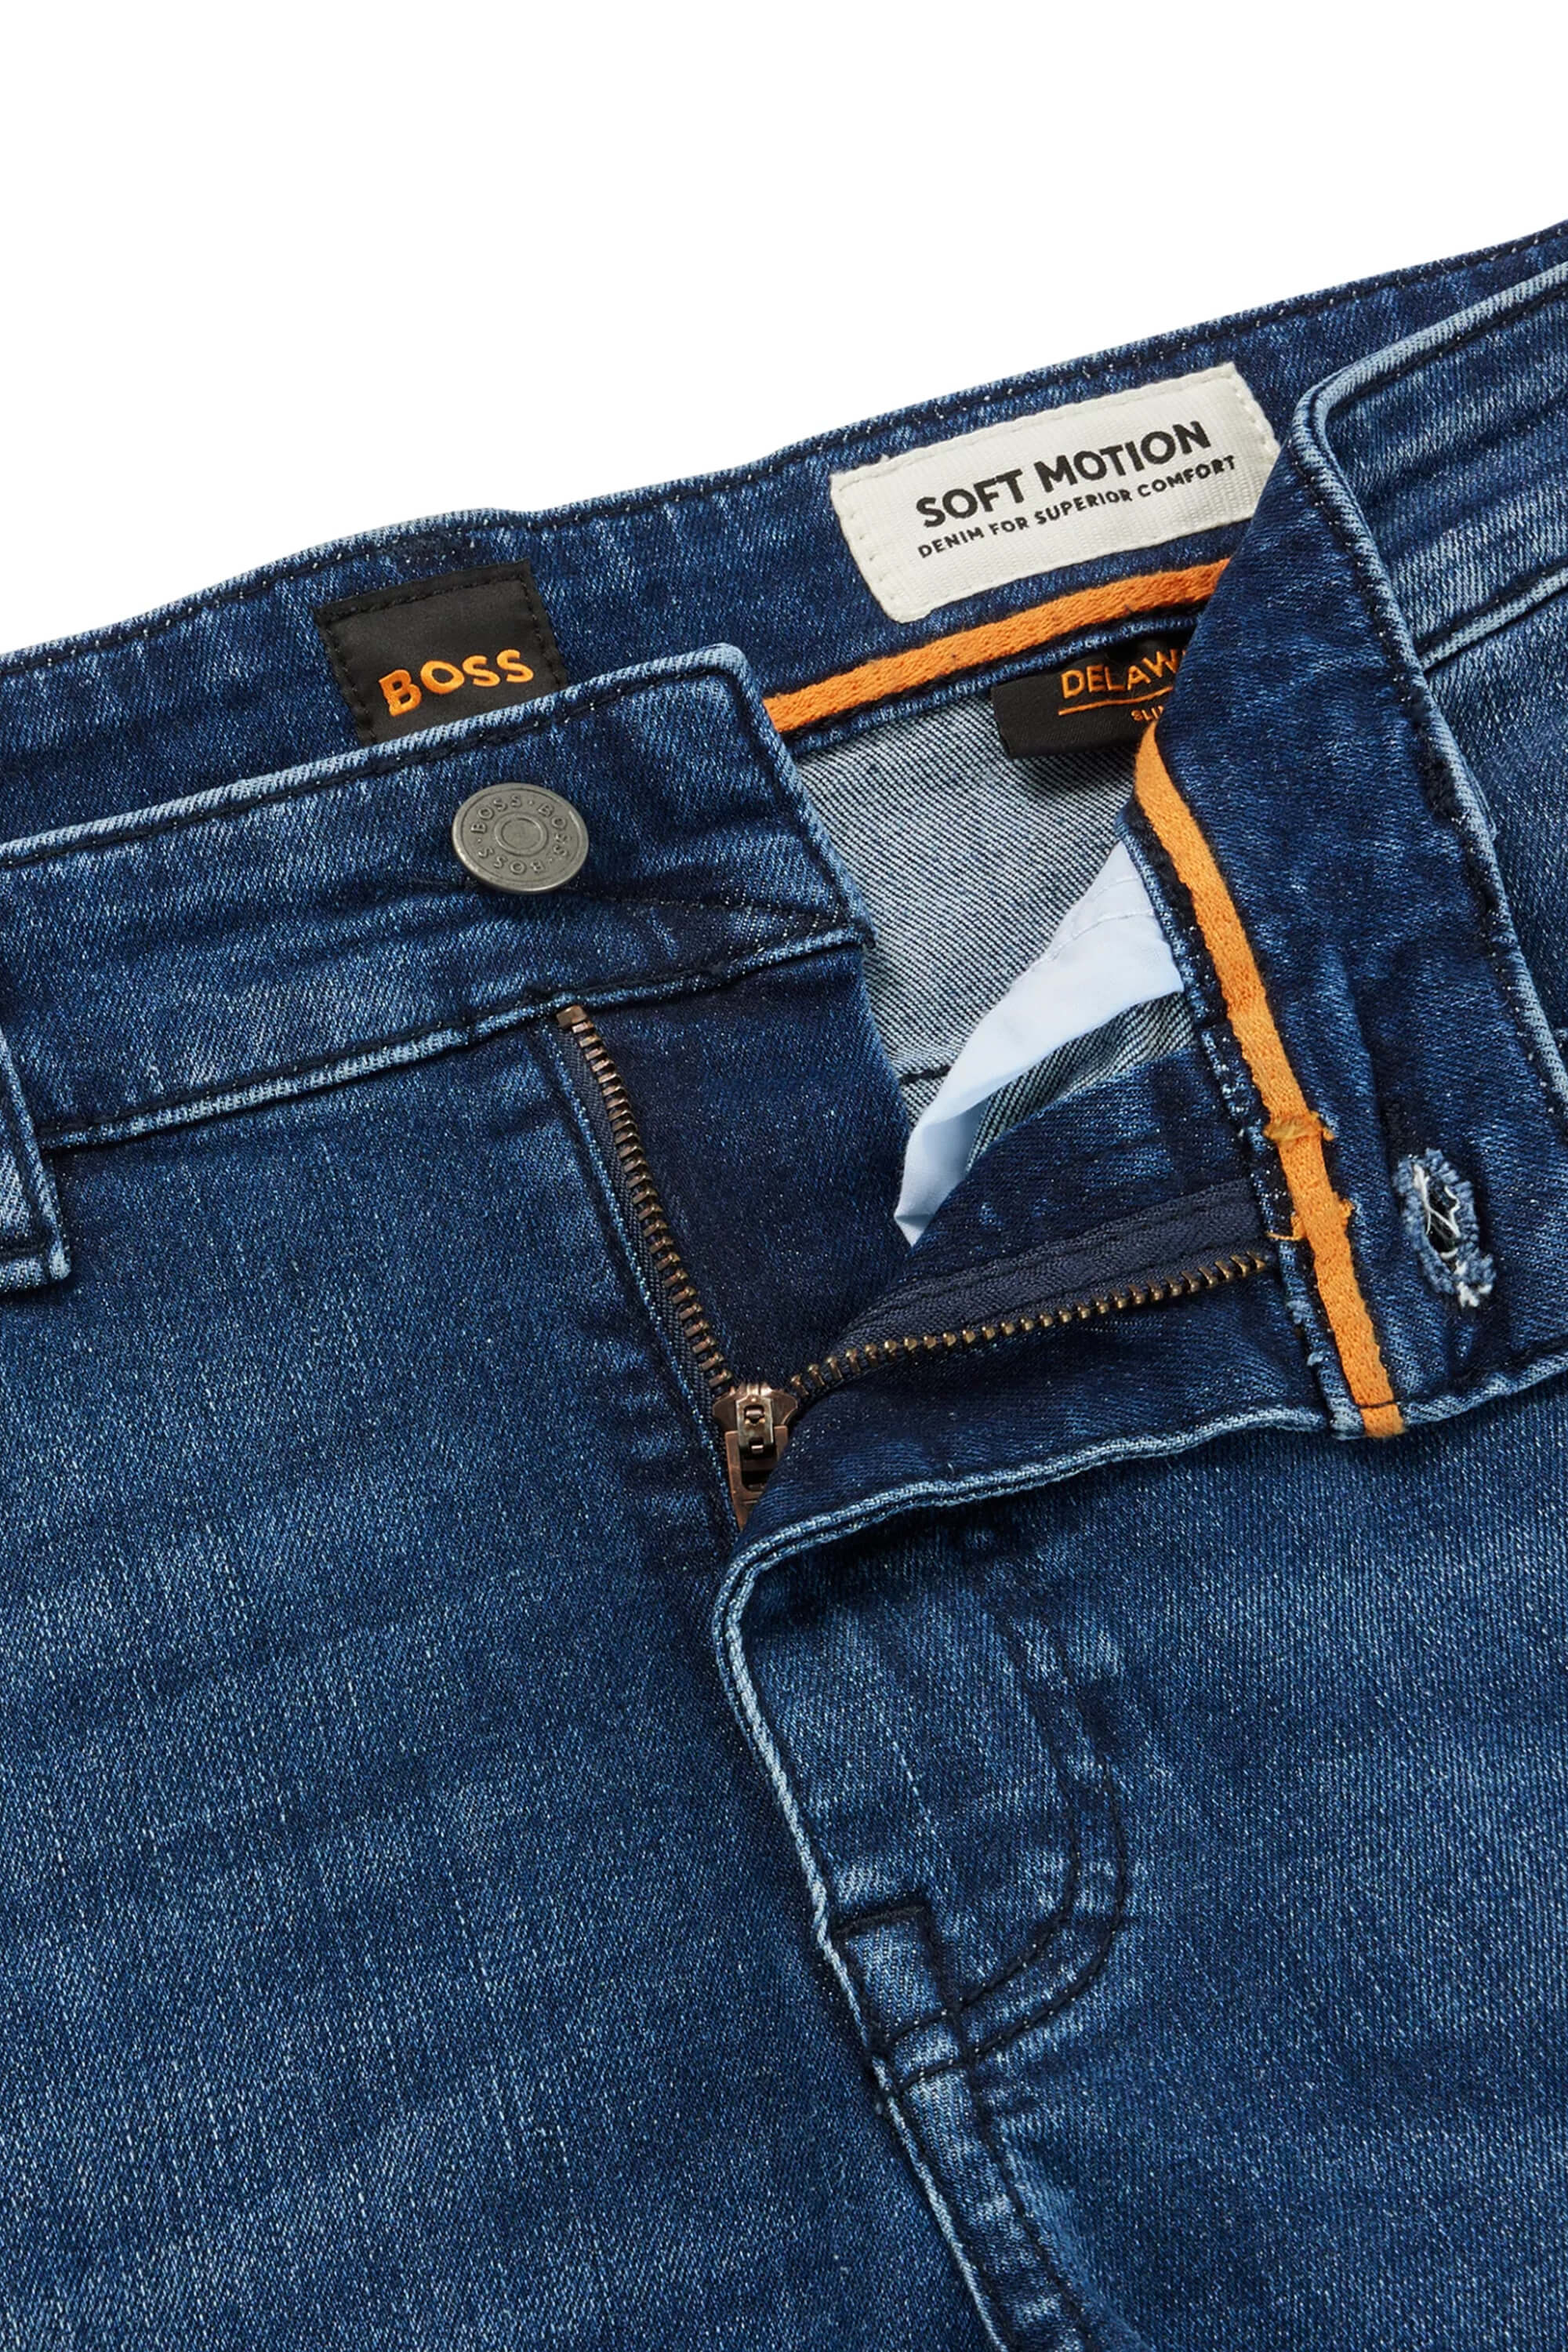 Hugo Boss Delaware S.Kind Jeans